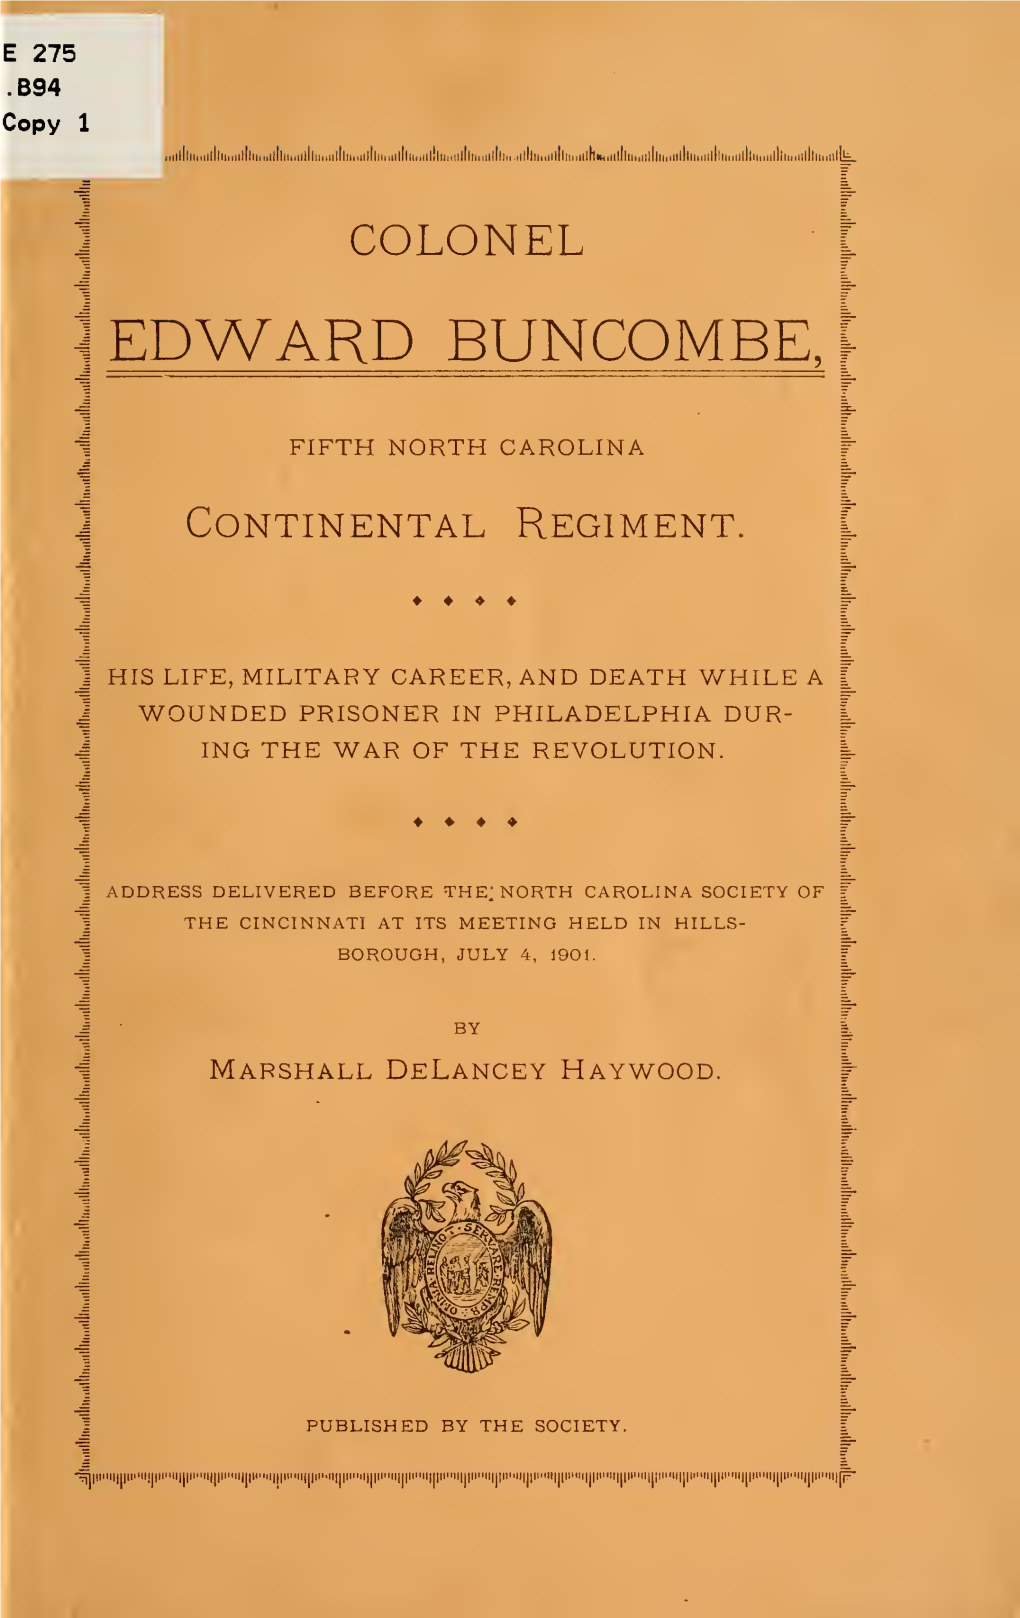 Colonel Edward Buncombe, Fifth North Carolina Continental Regiment